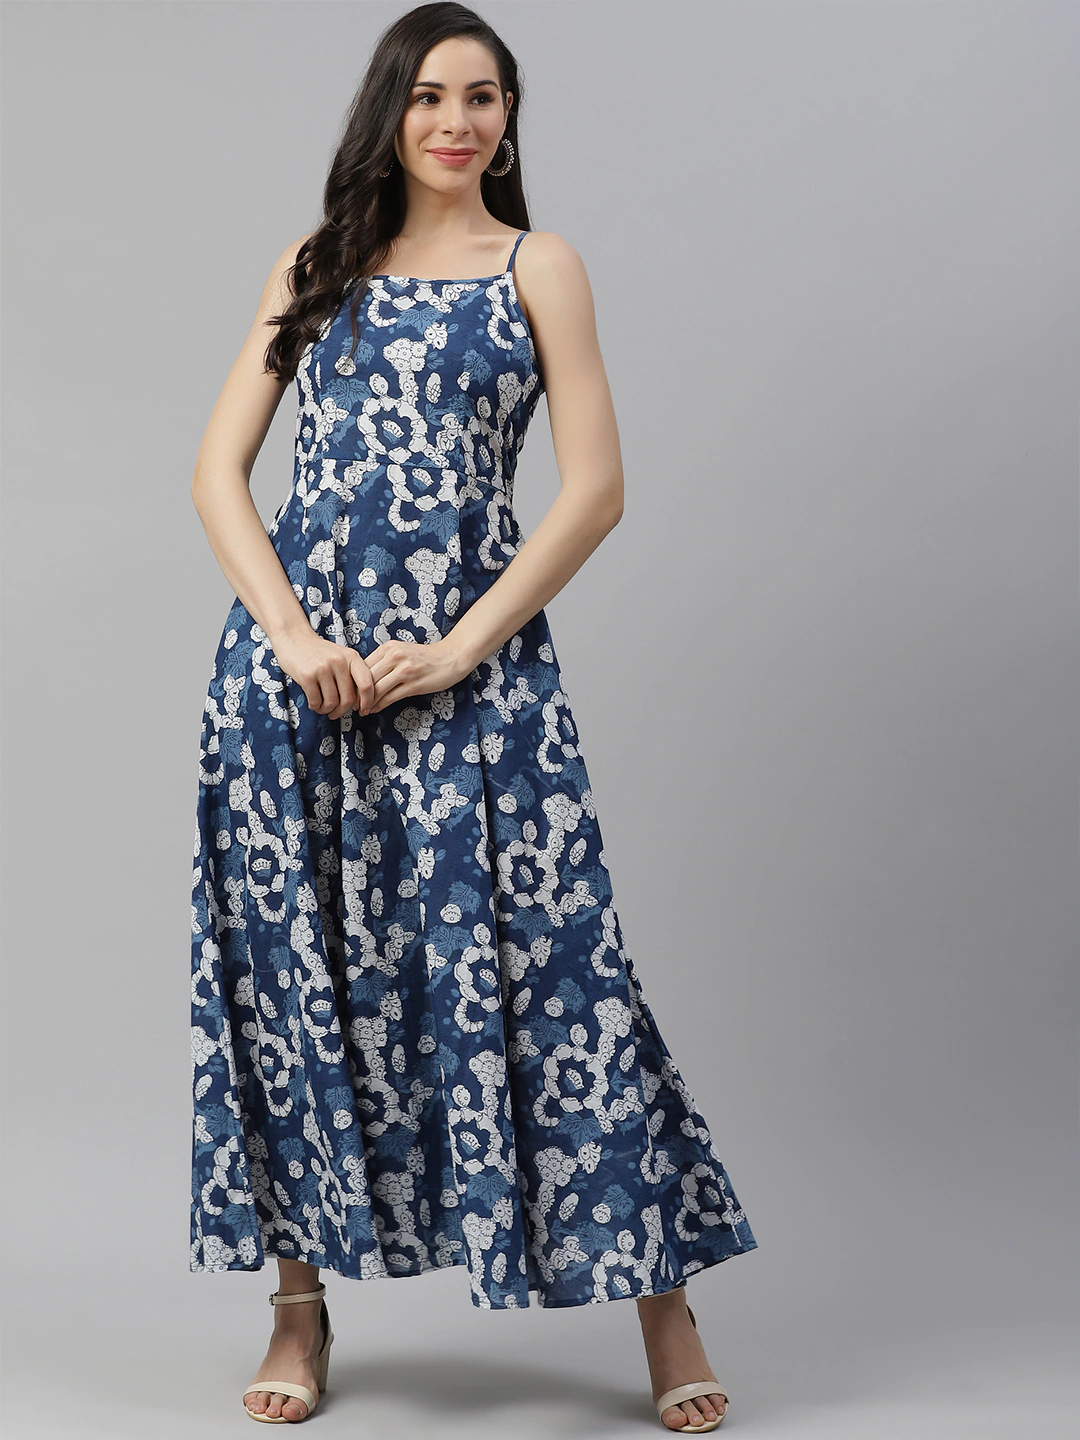 Women's Indigo Print Cotton Long Dress - Final Clearance Sale